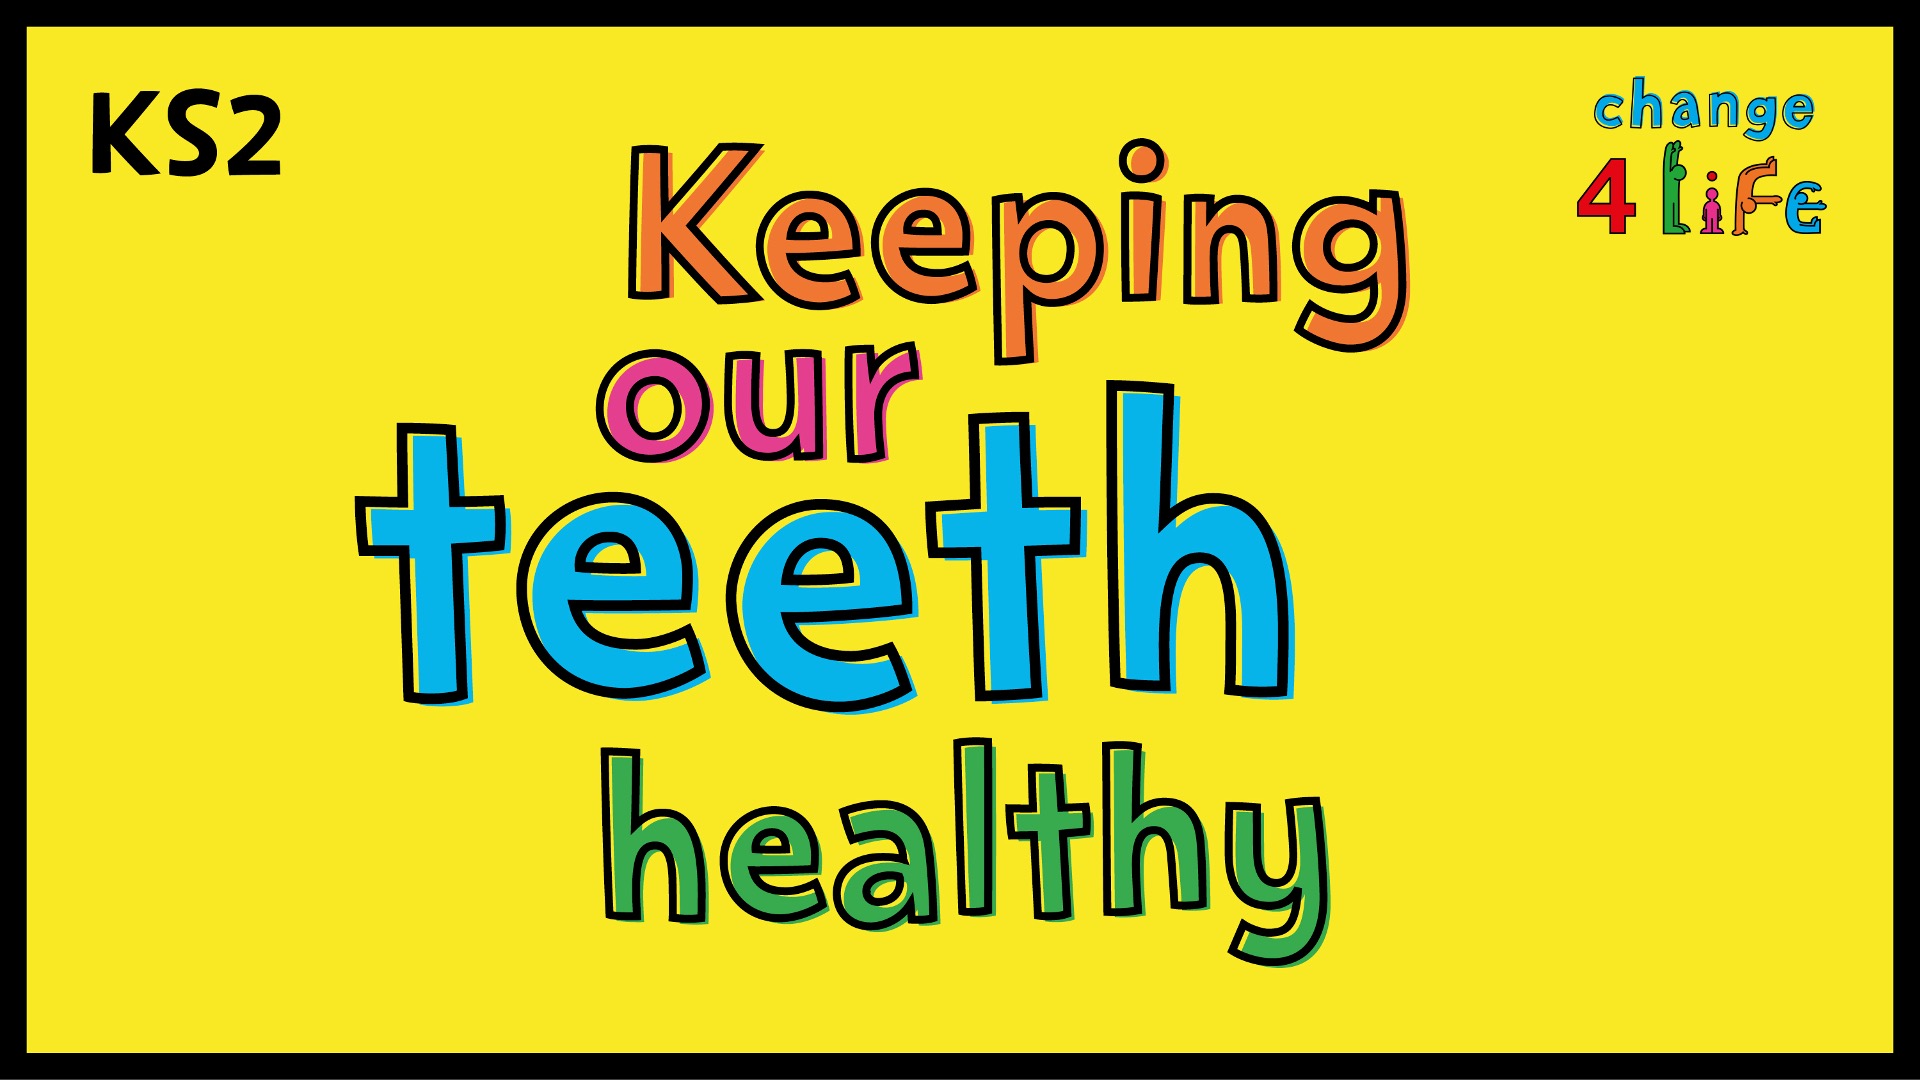 Keeping our teeth healthy KS2 lesson plan